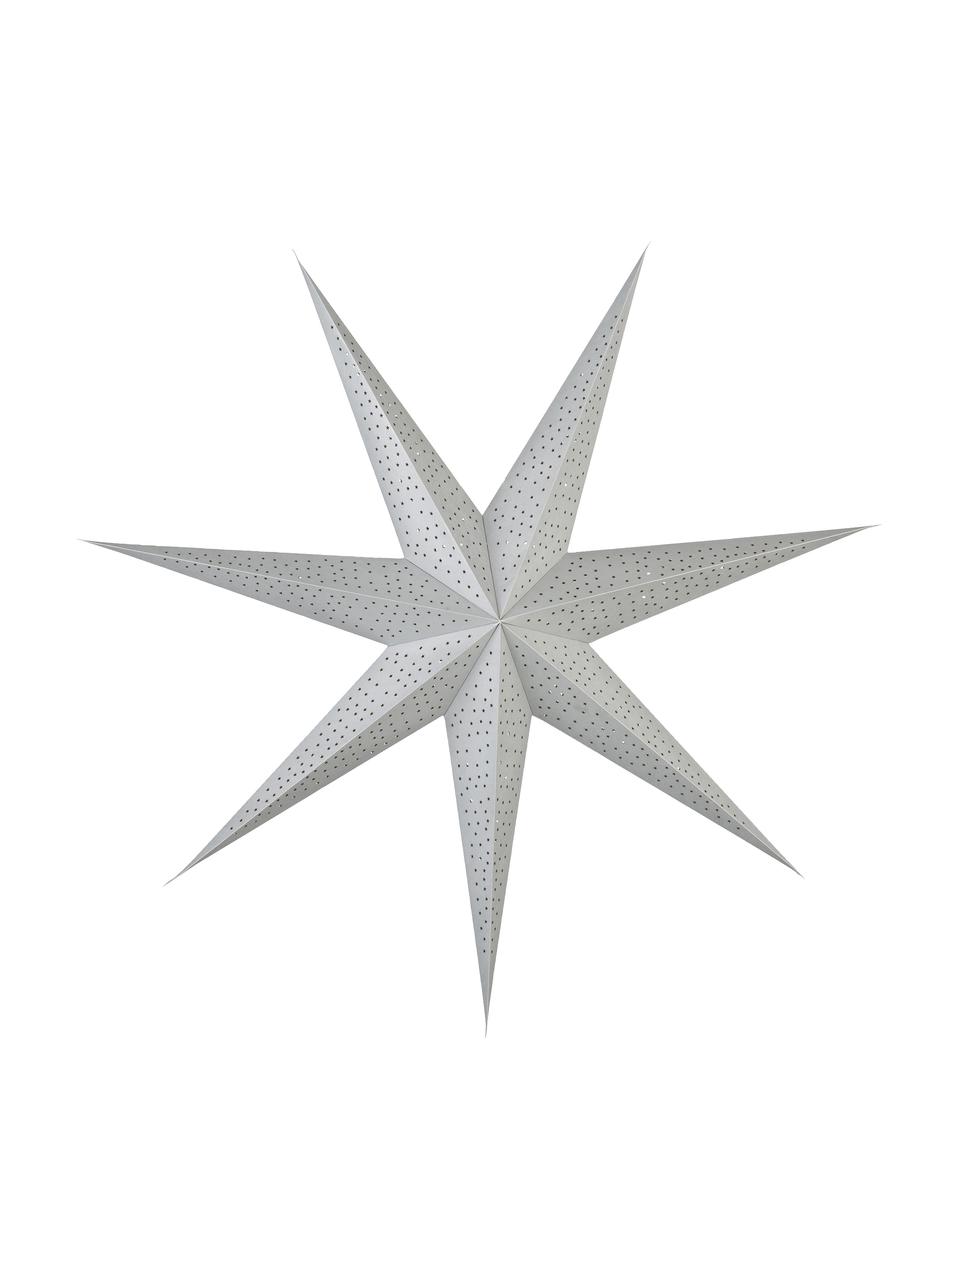 Papier-Stern Icilinia in Silberfarben, Papier, Silberfarben, B 80 x H 80 cm